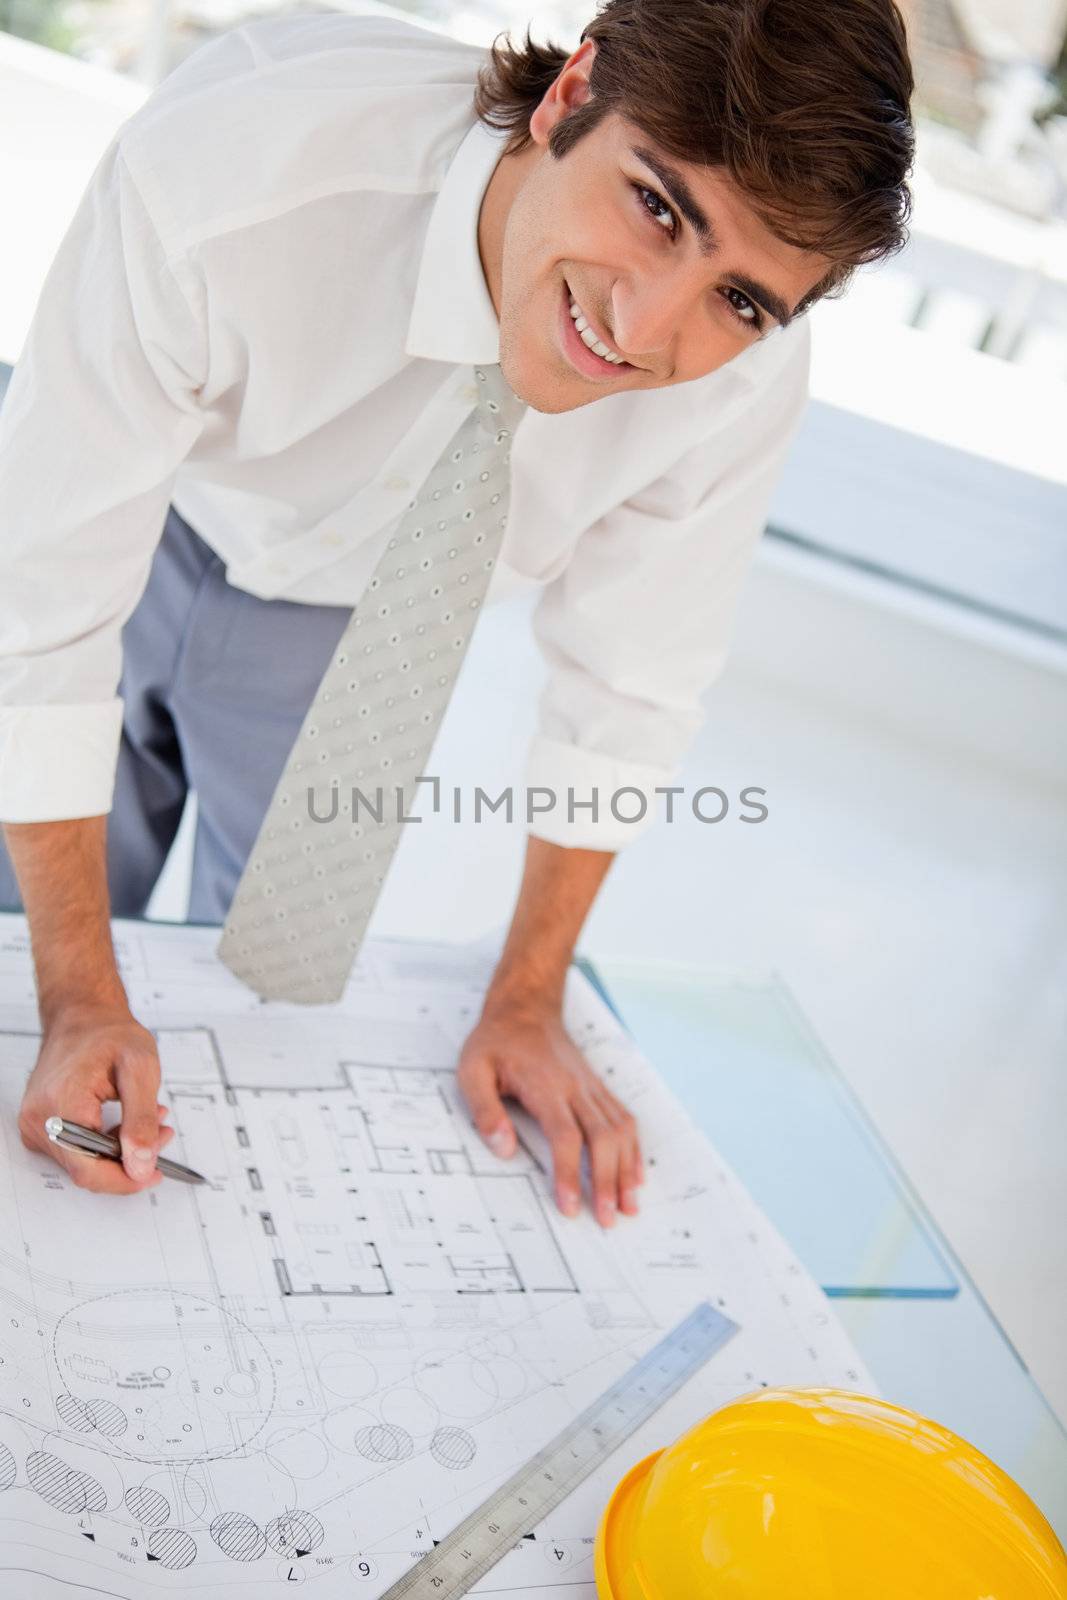 A smiling businessman works hard on his blueprints for work